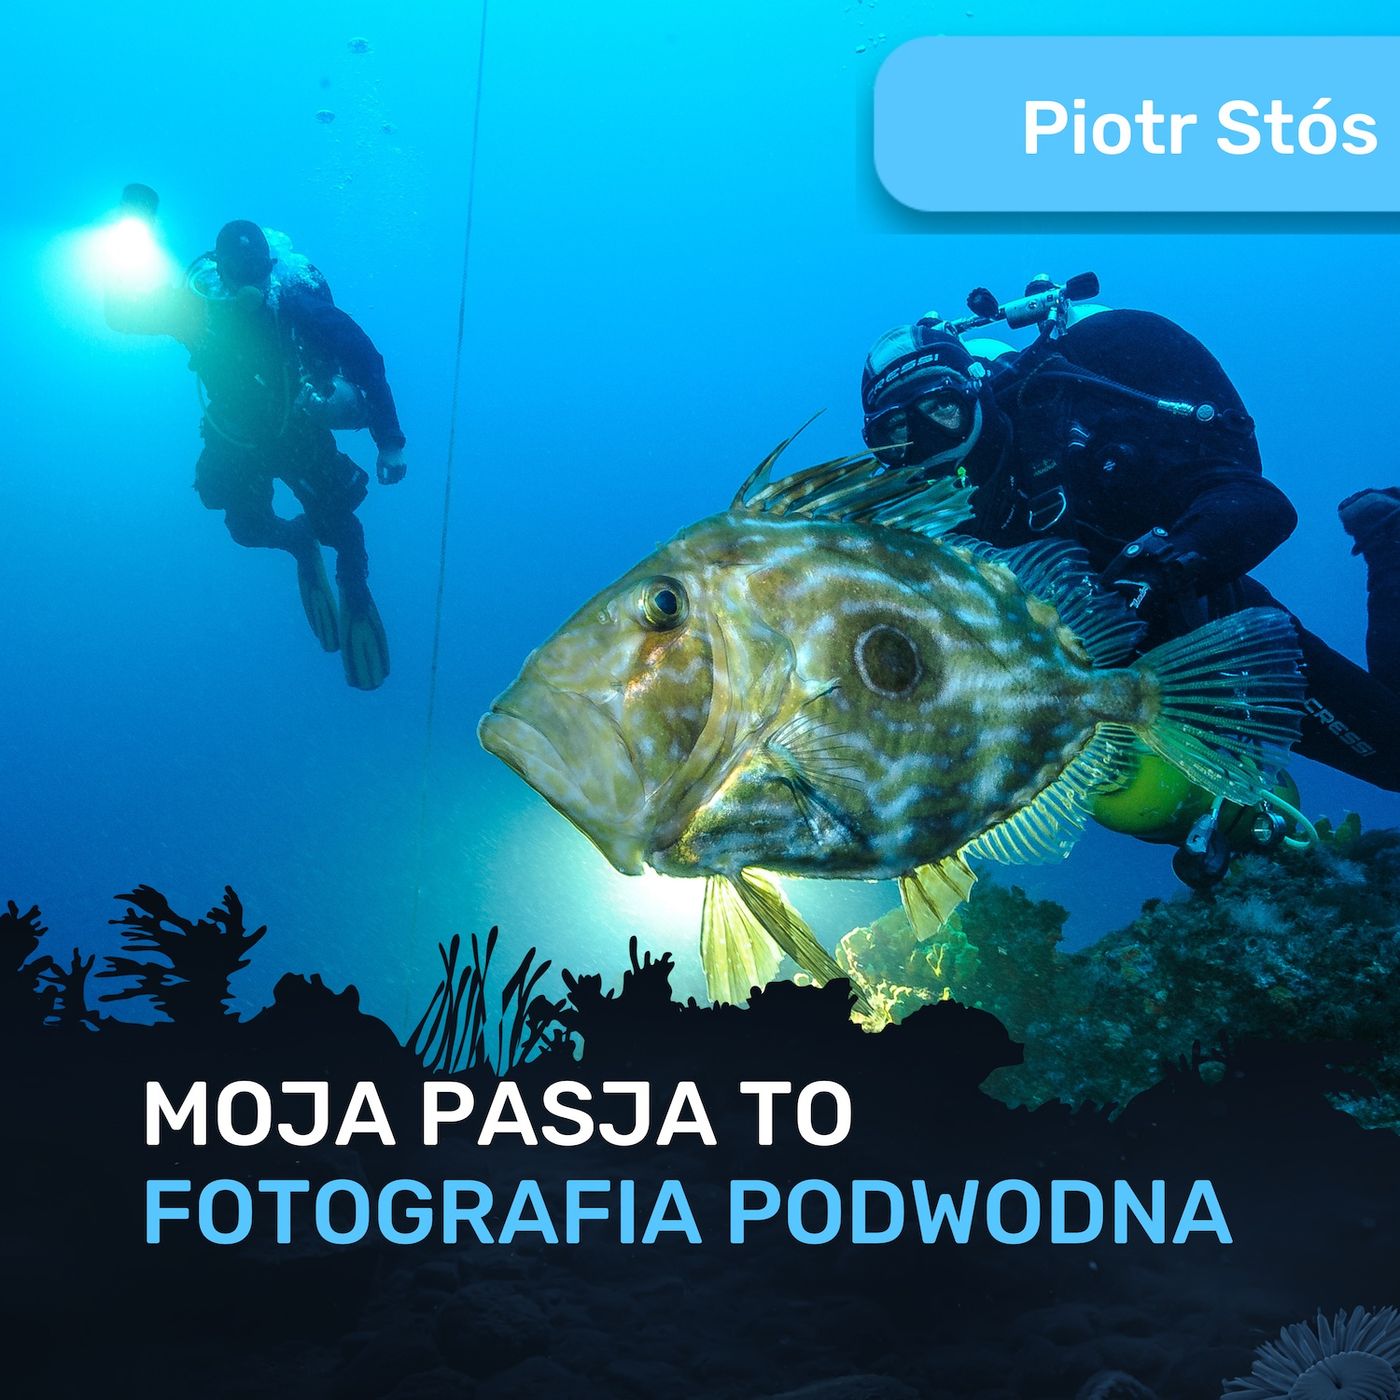 Fotografia podwodna to moja pasja – Piotr Stós